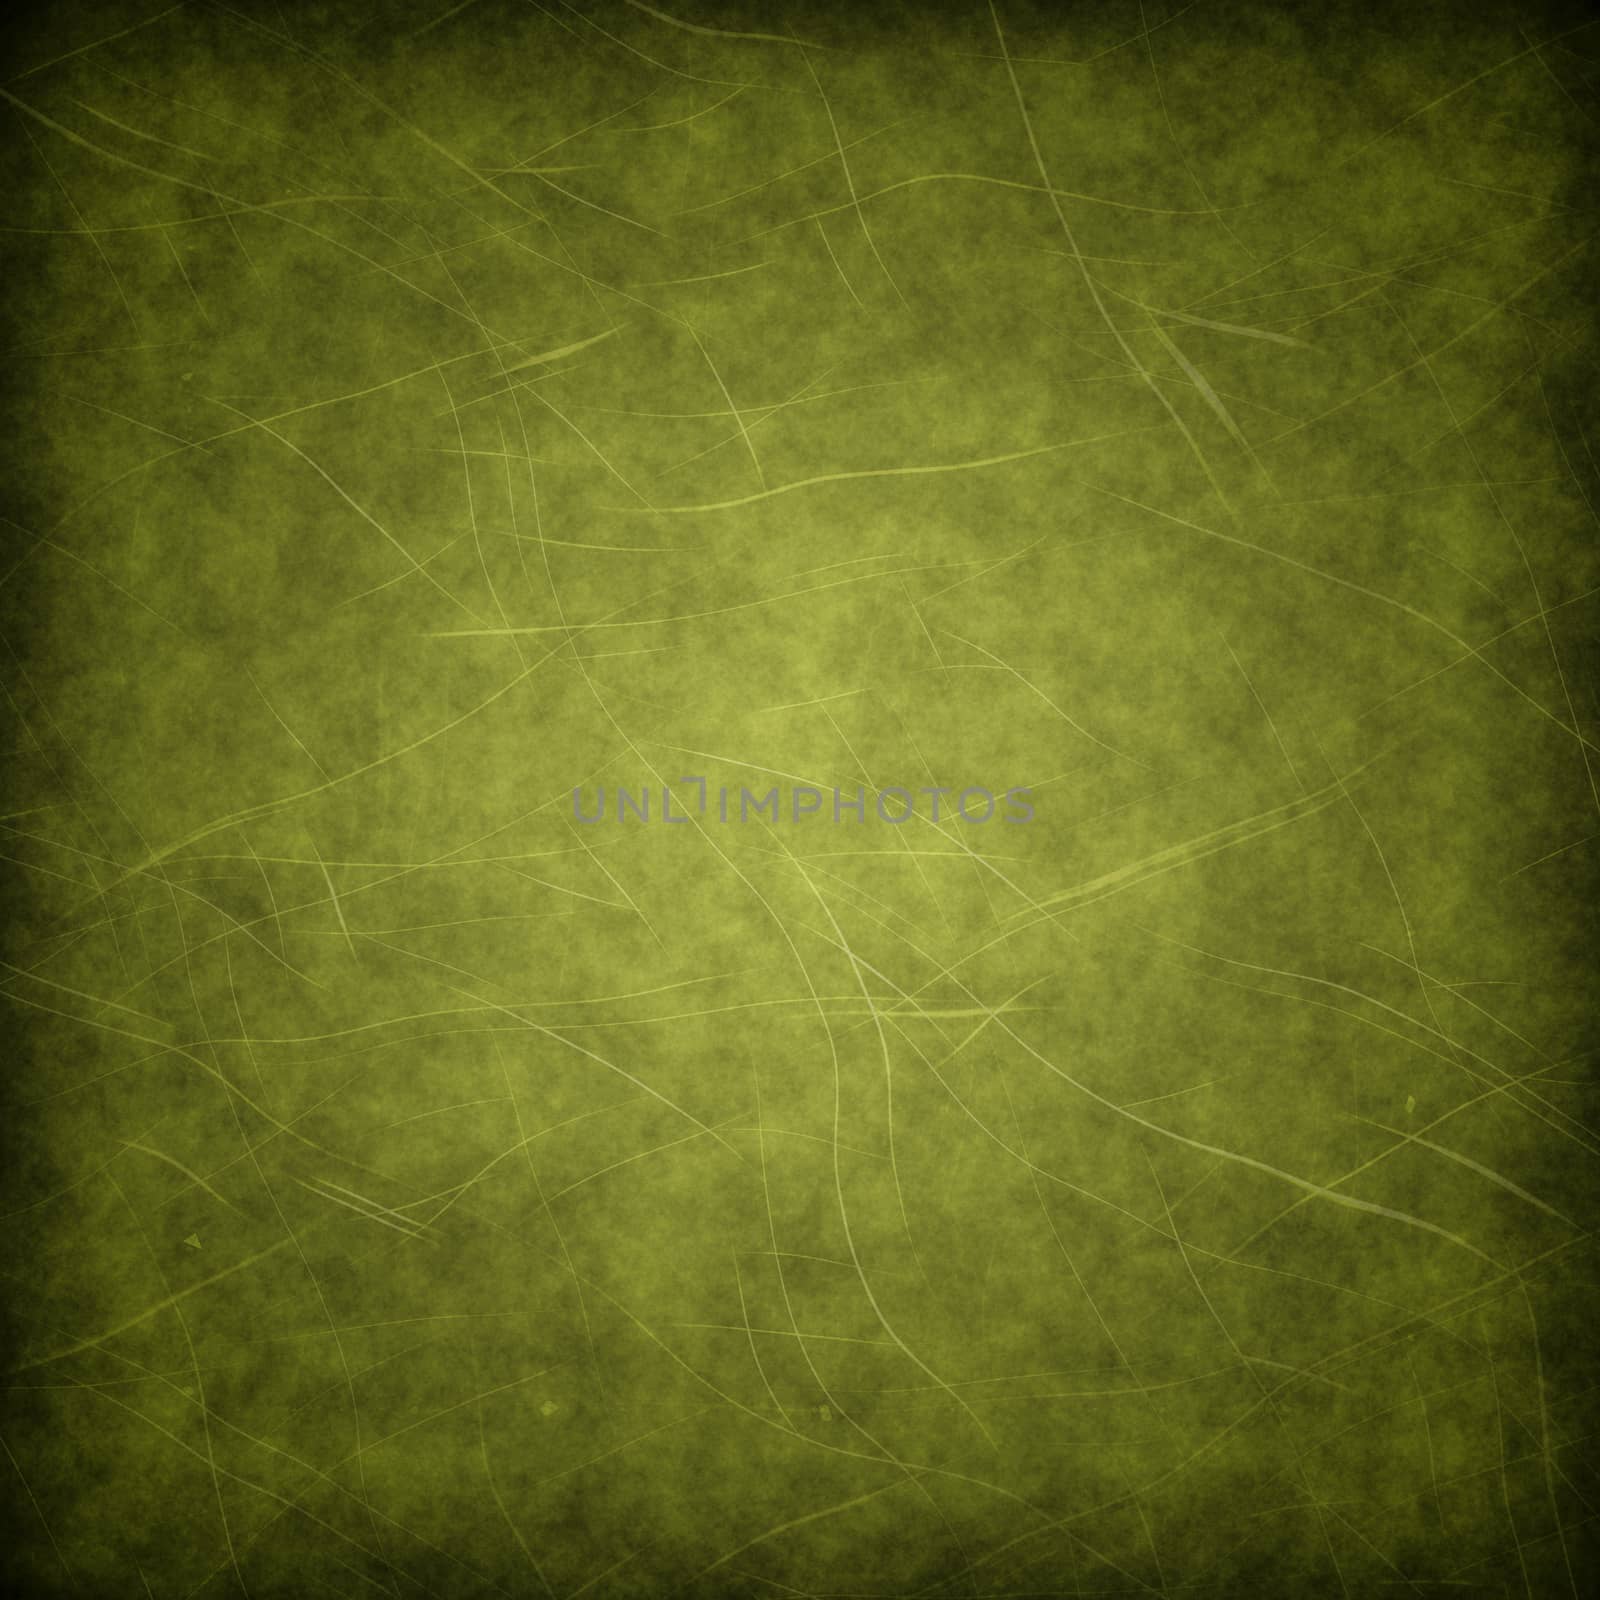 Green grunge background or texture